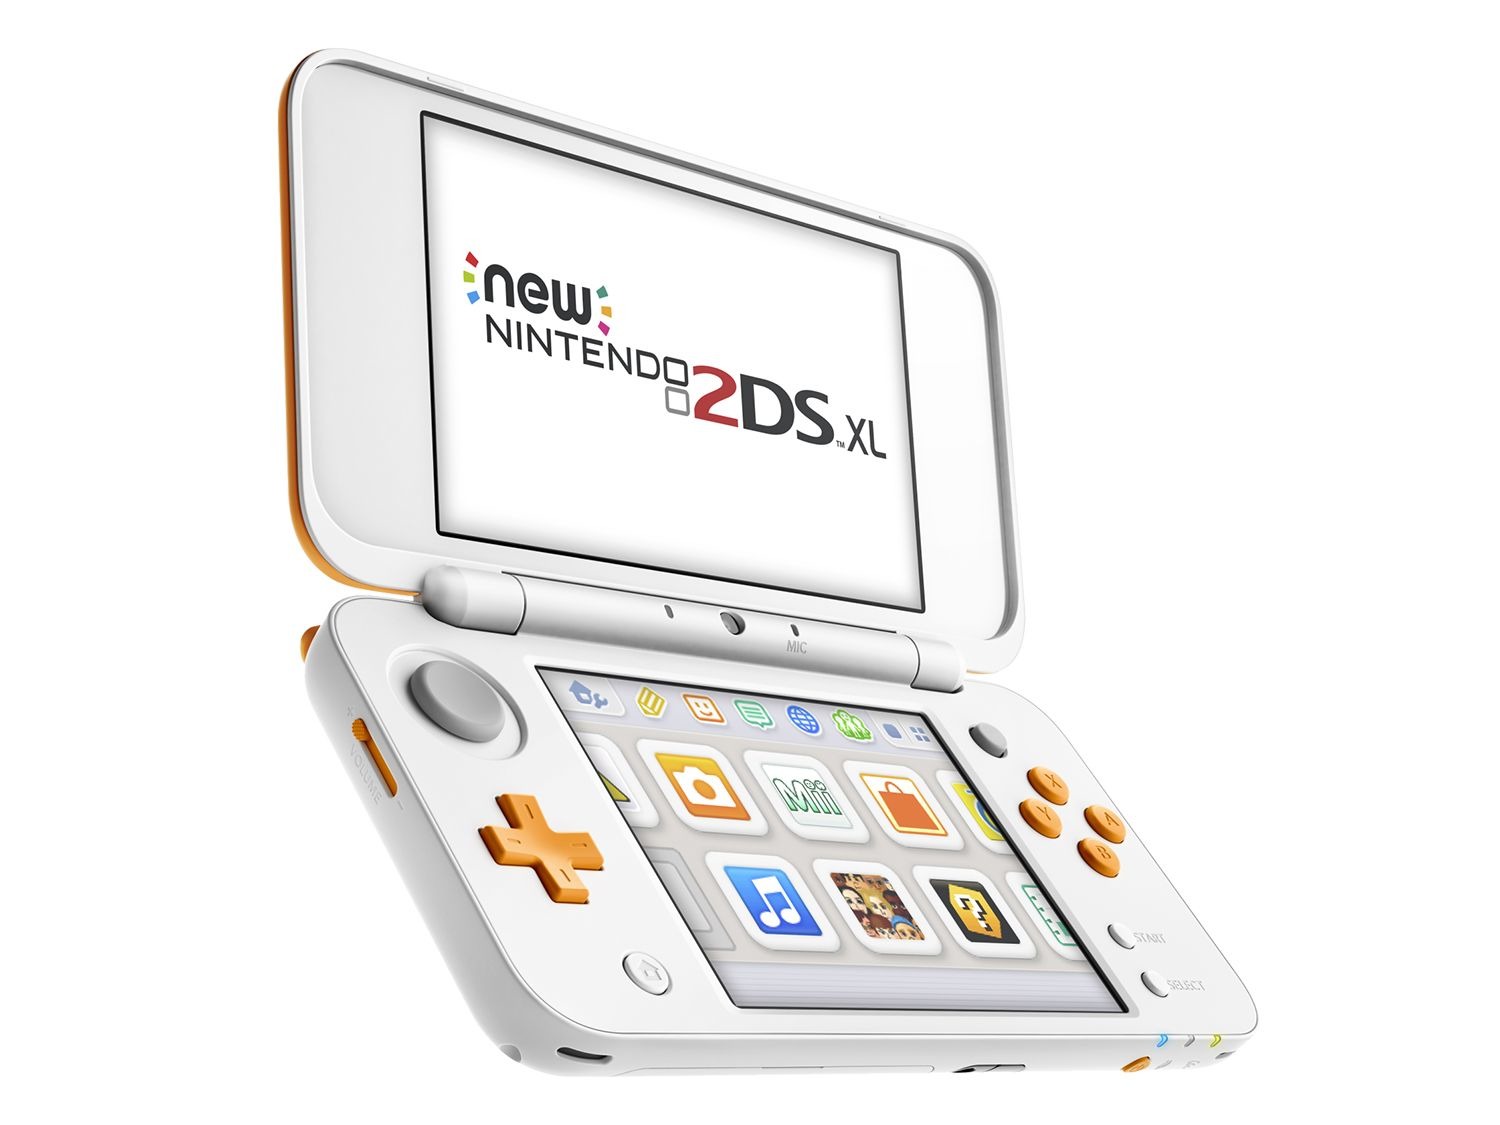 White nintendo. Nintendo 2ds XL. New Nintendo 2ds XL. Nintendo DS XL. Nintendo 2ds XL White.